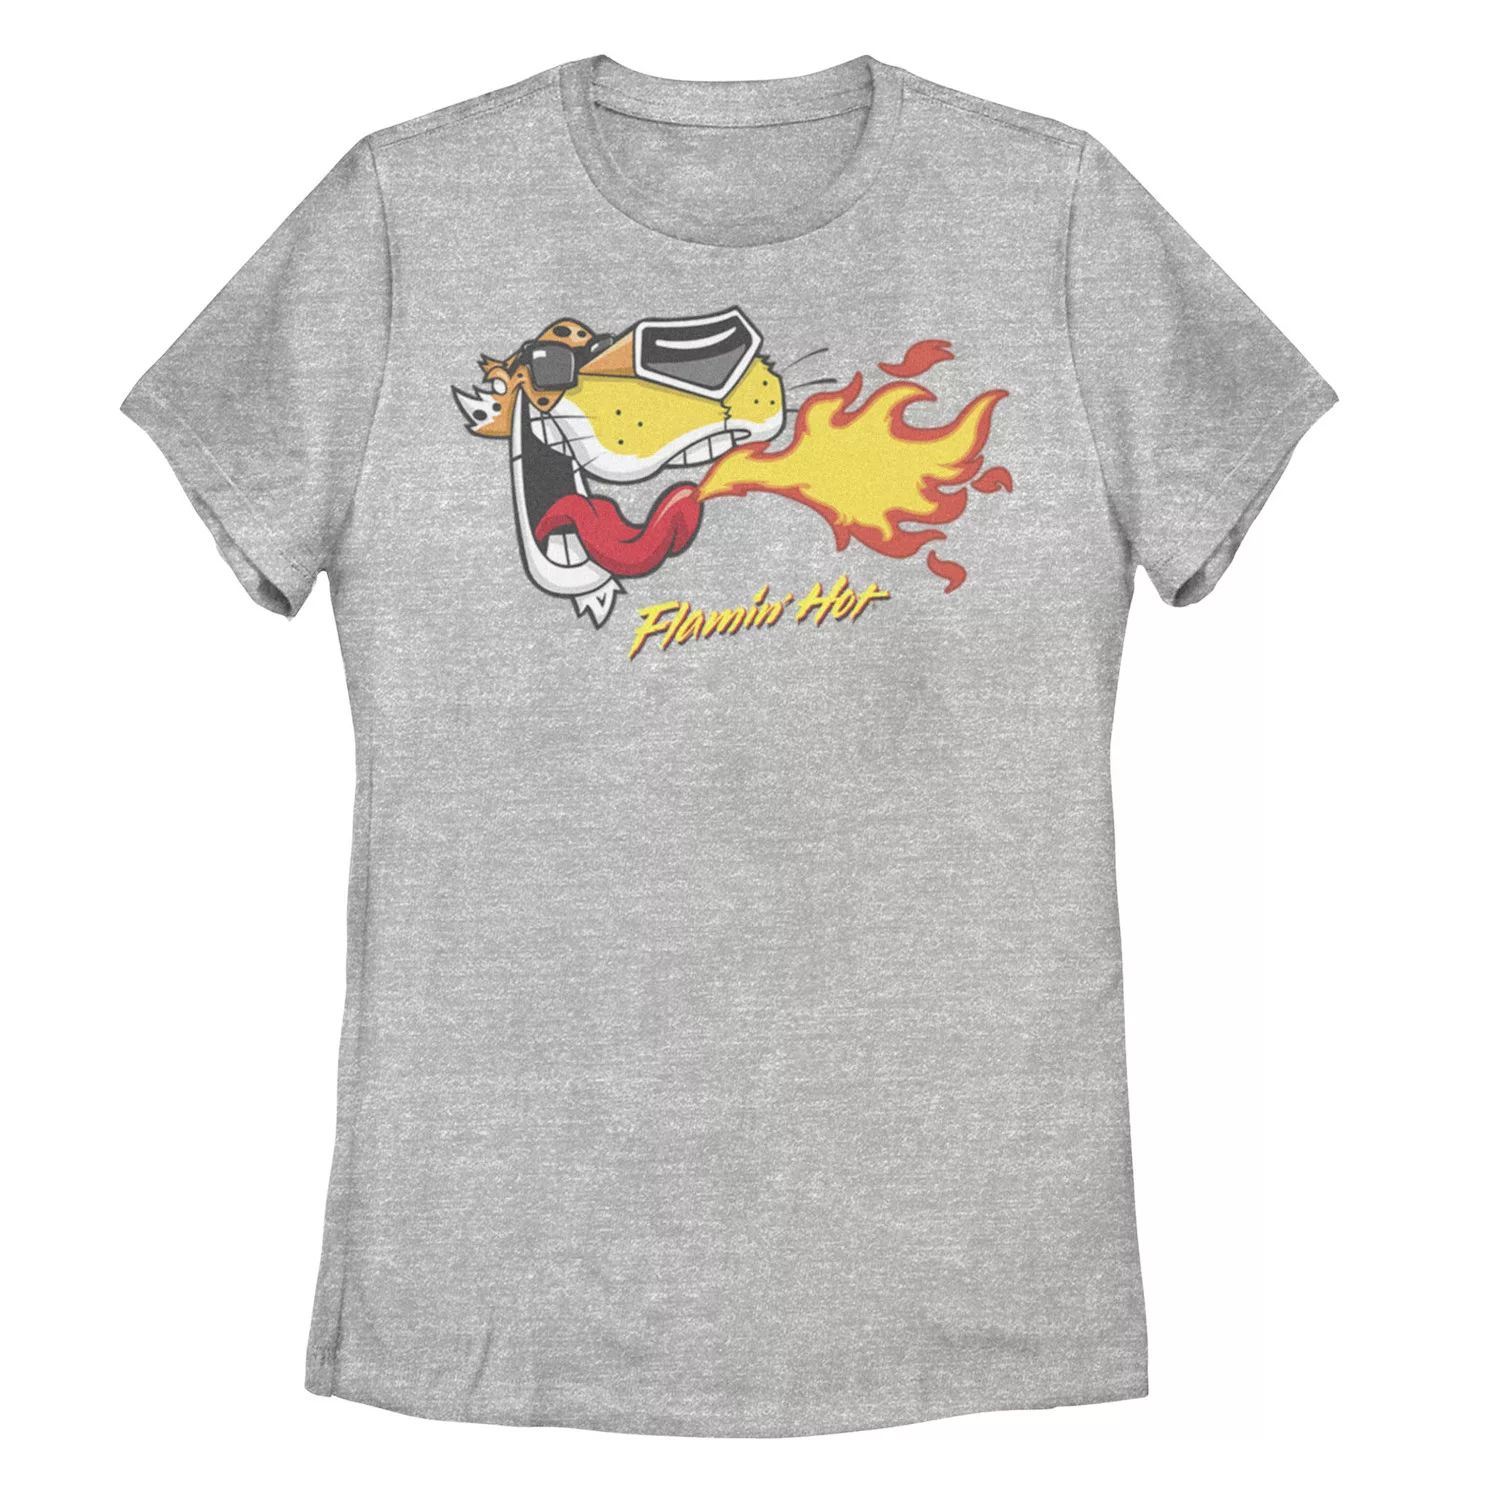 Юниорская футболка Chester Cheetos Flamin Hot Head с графическим рисунком Licensed Character